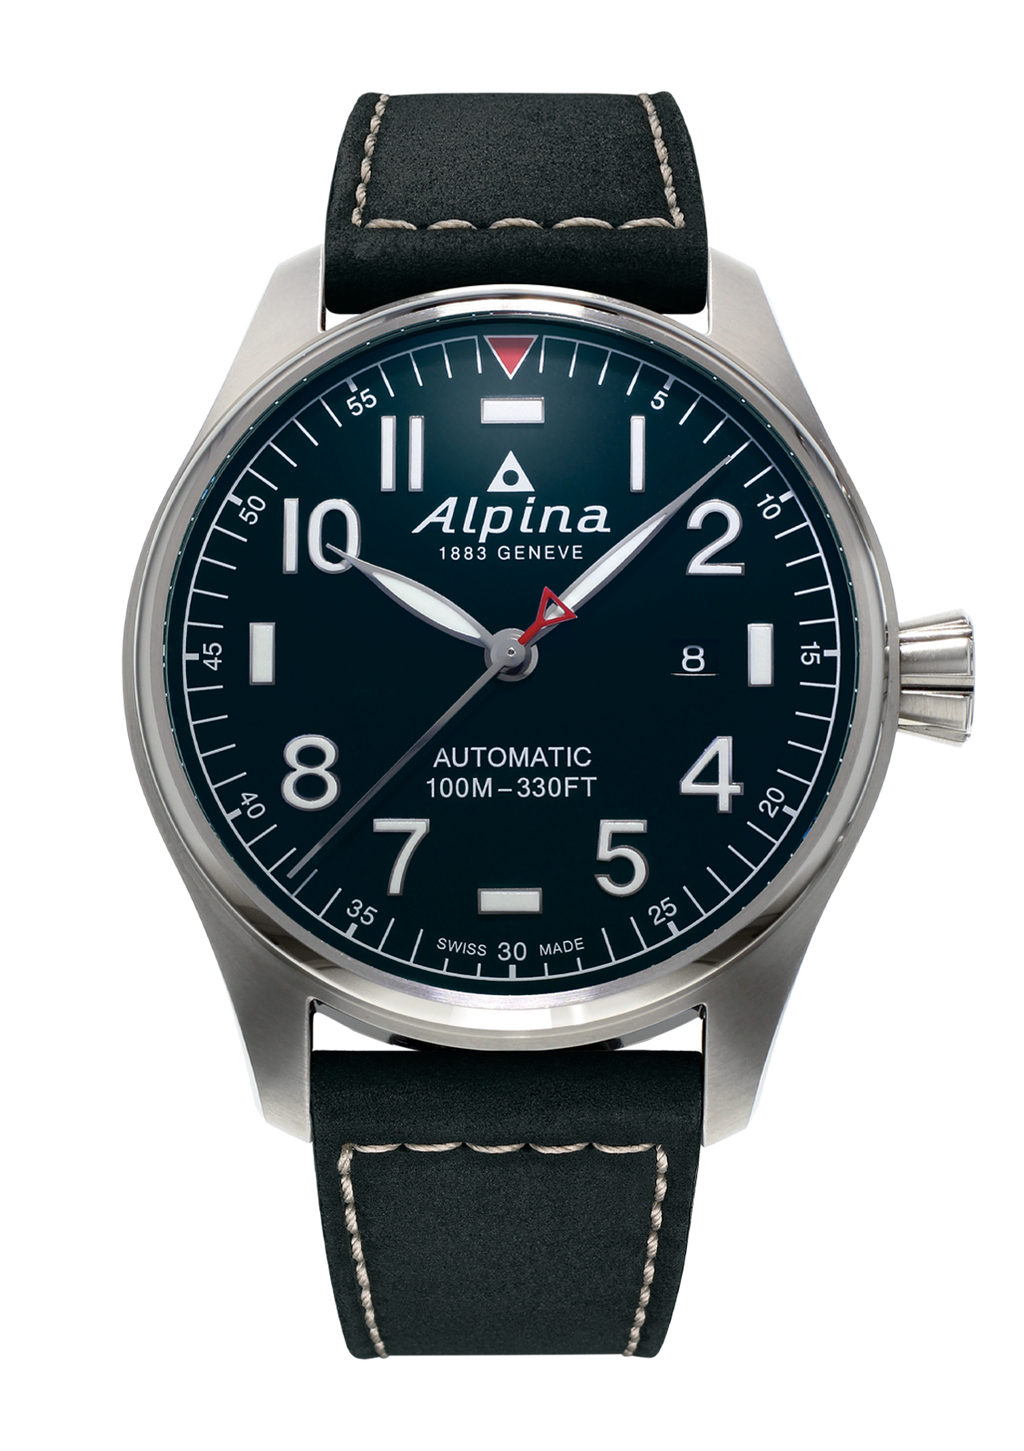 NEW ALPINA STARTIMER PILOT AUTOMATIC CHRONOGRAPH WATCHES – Alpina Watches